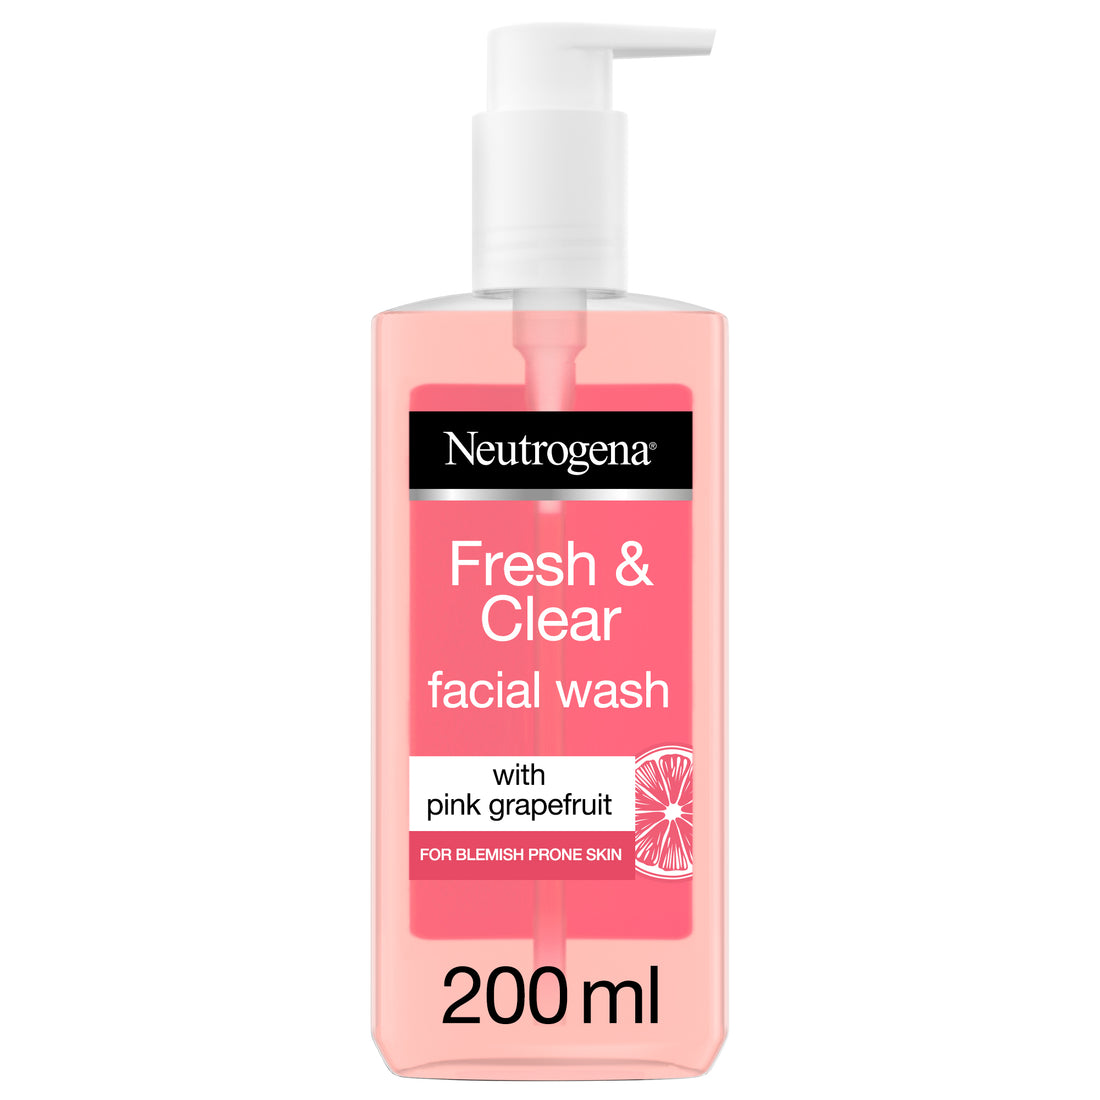 Neutrogena, Facial Wash, Visibly Clear, Pink Grapefruit, 200ml